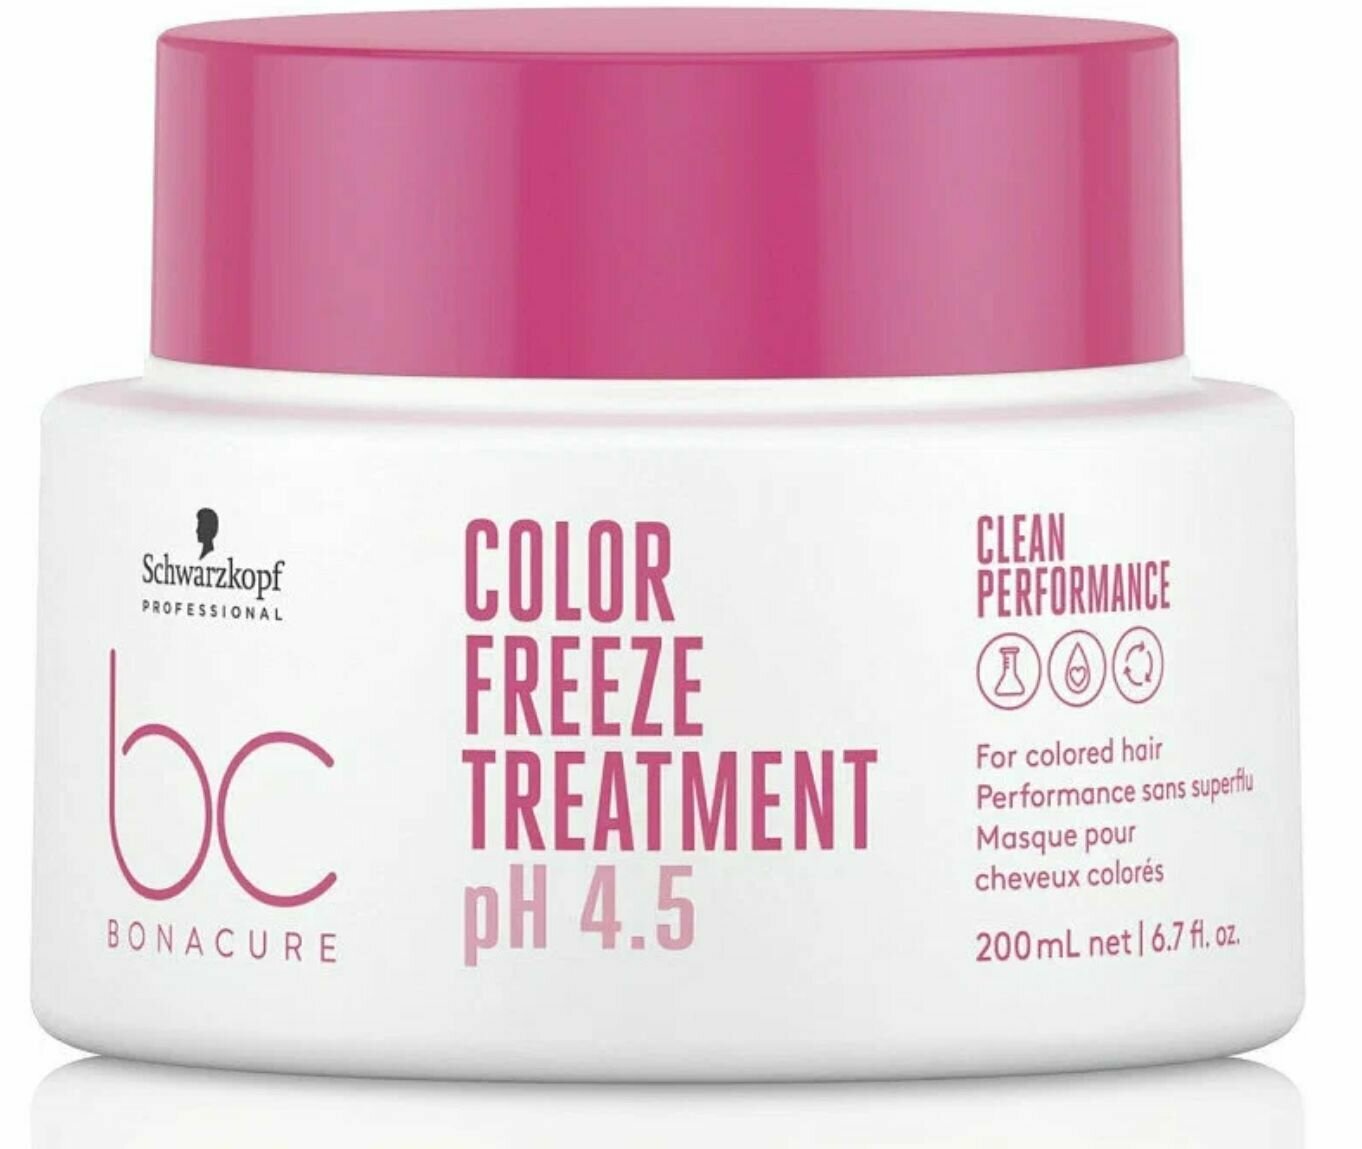 Schwarzkopf Professional Bonacure Clean Performance Color Freeze Treatment - Маска для сохранения цвета волос 200 мл